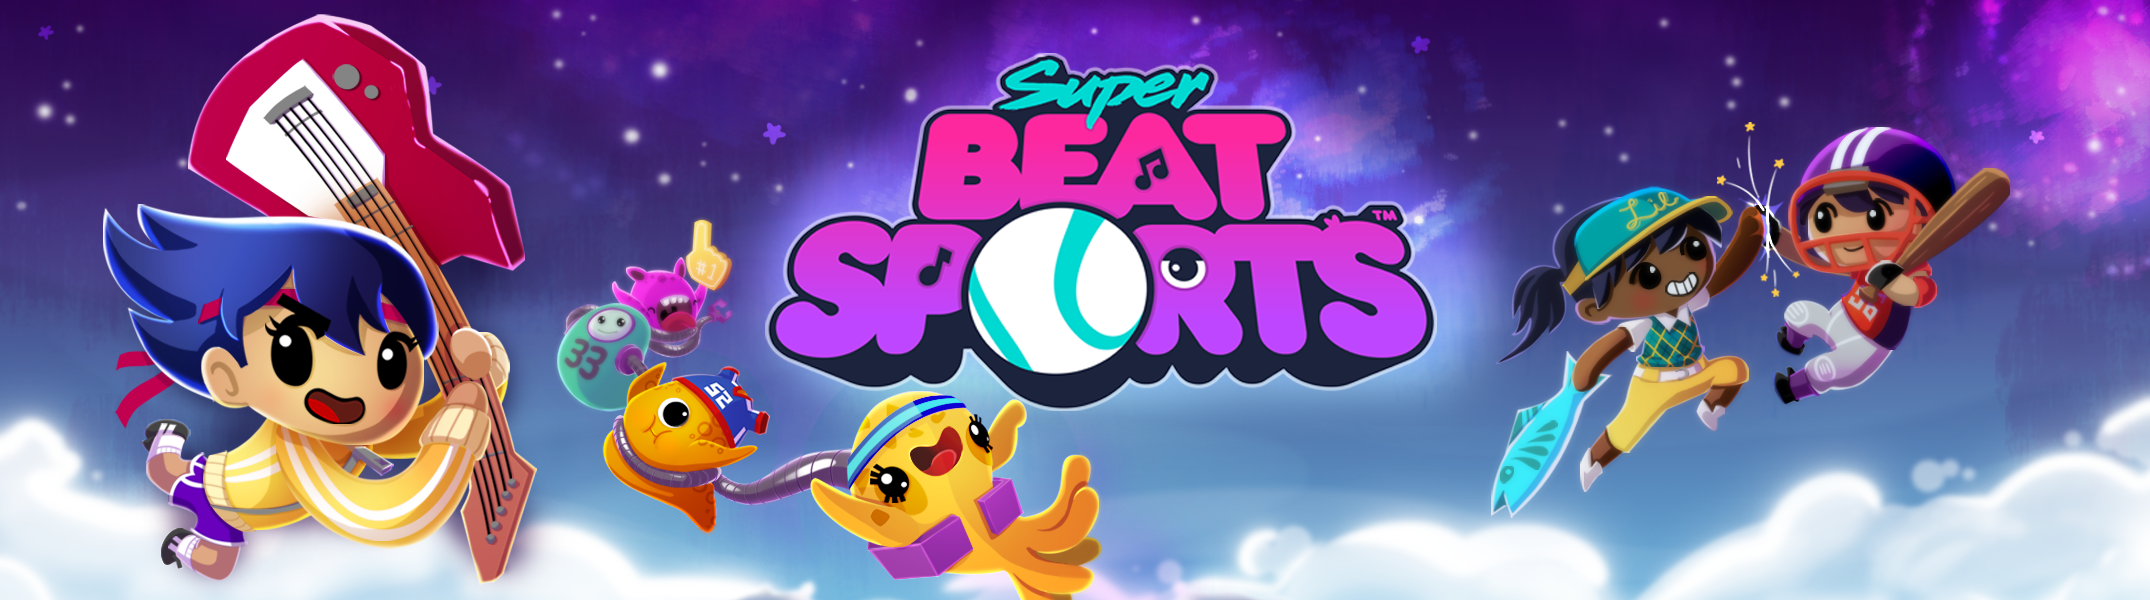 Super Beat Sports Titre